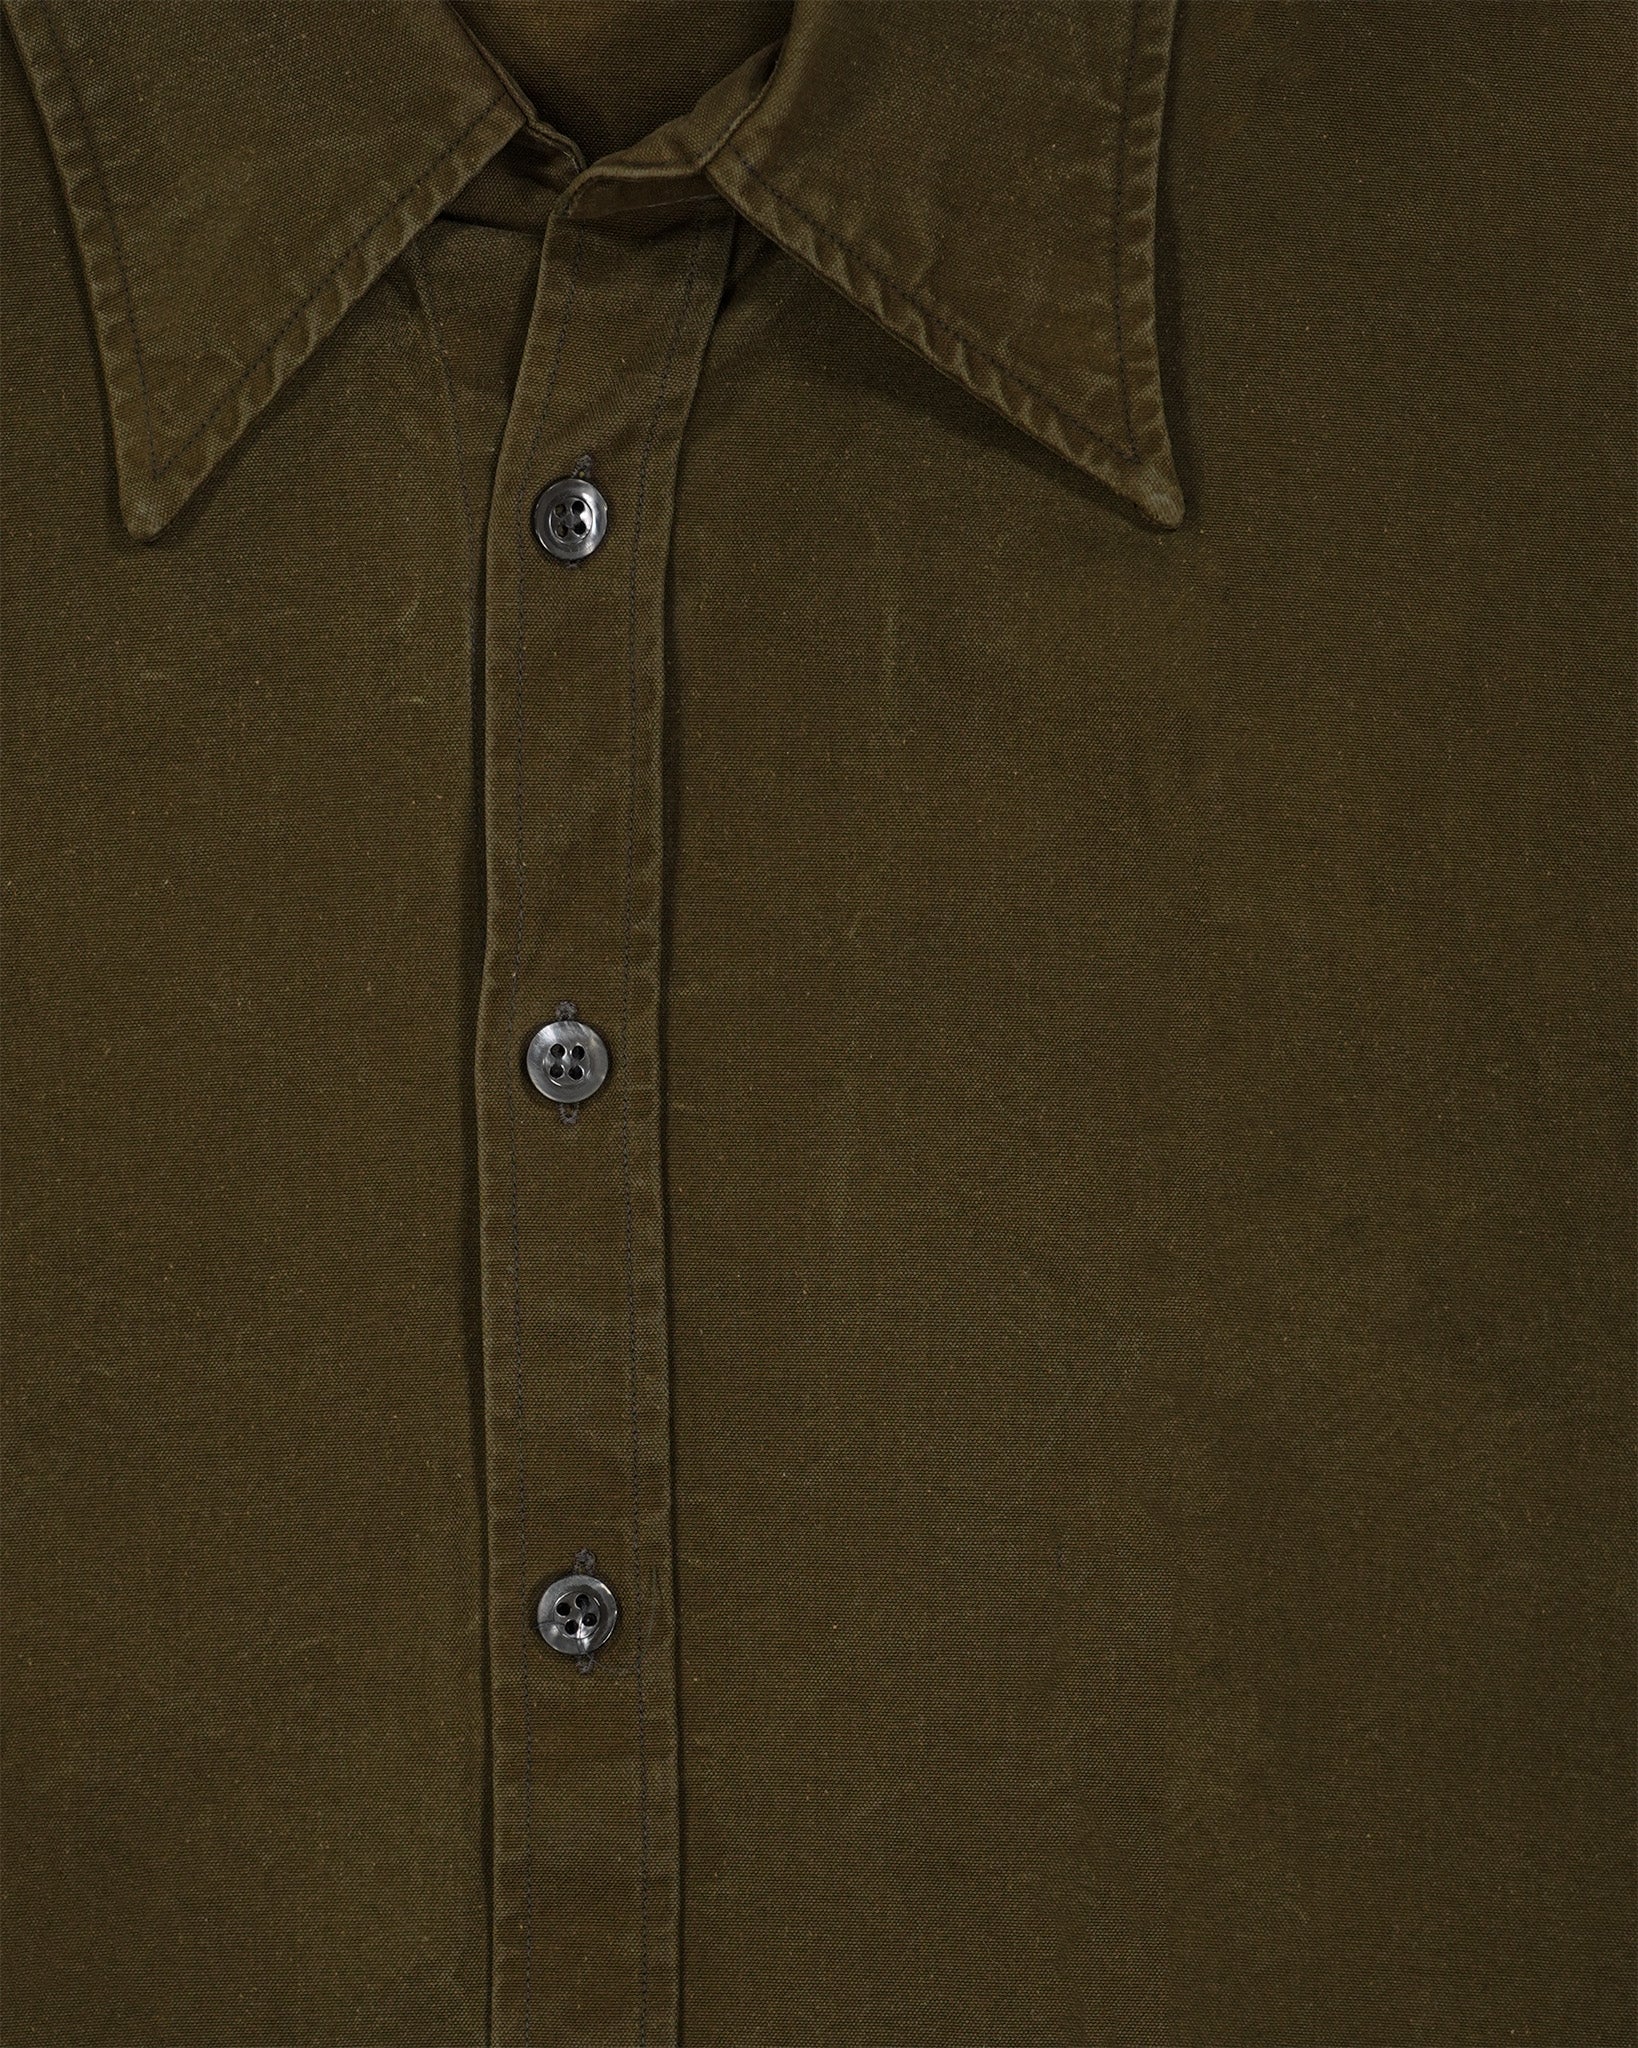 Carol Christian Poell Heavyweight Military Button Up Shirt - AW97 "Aerodynamics"